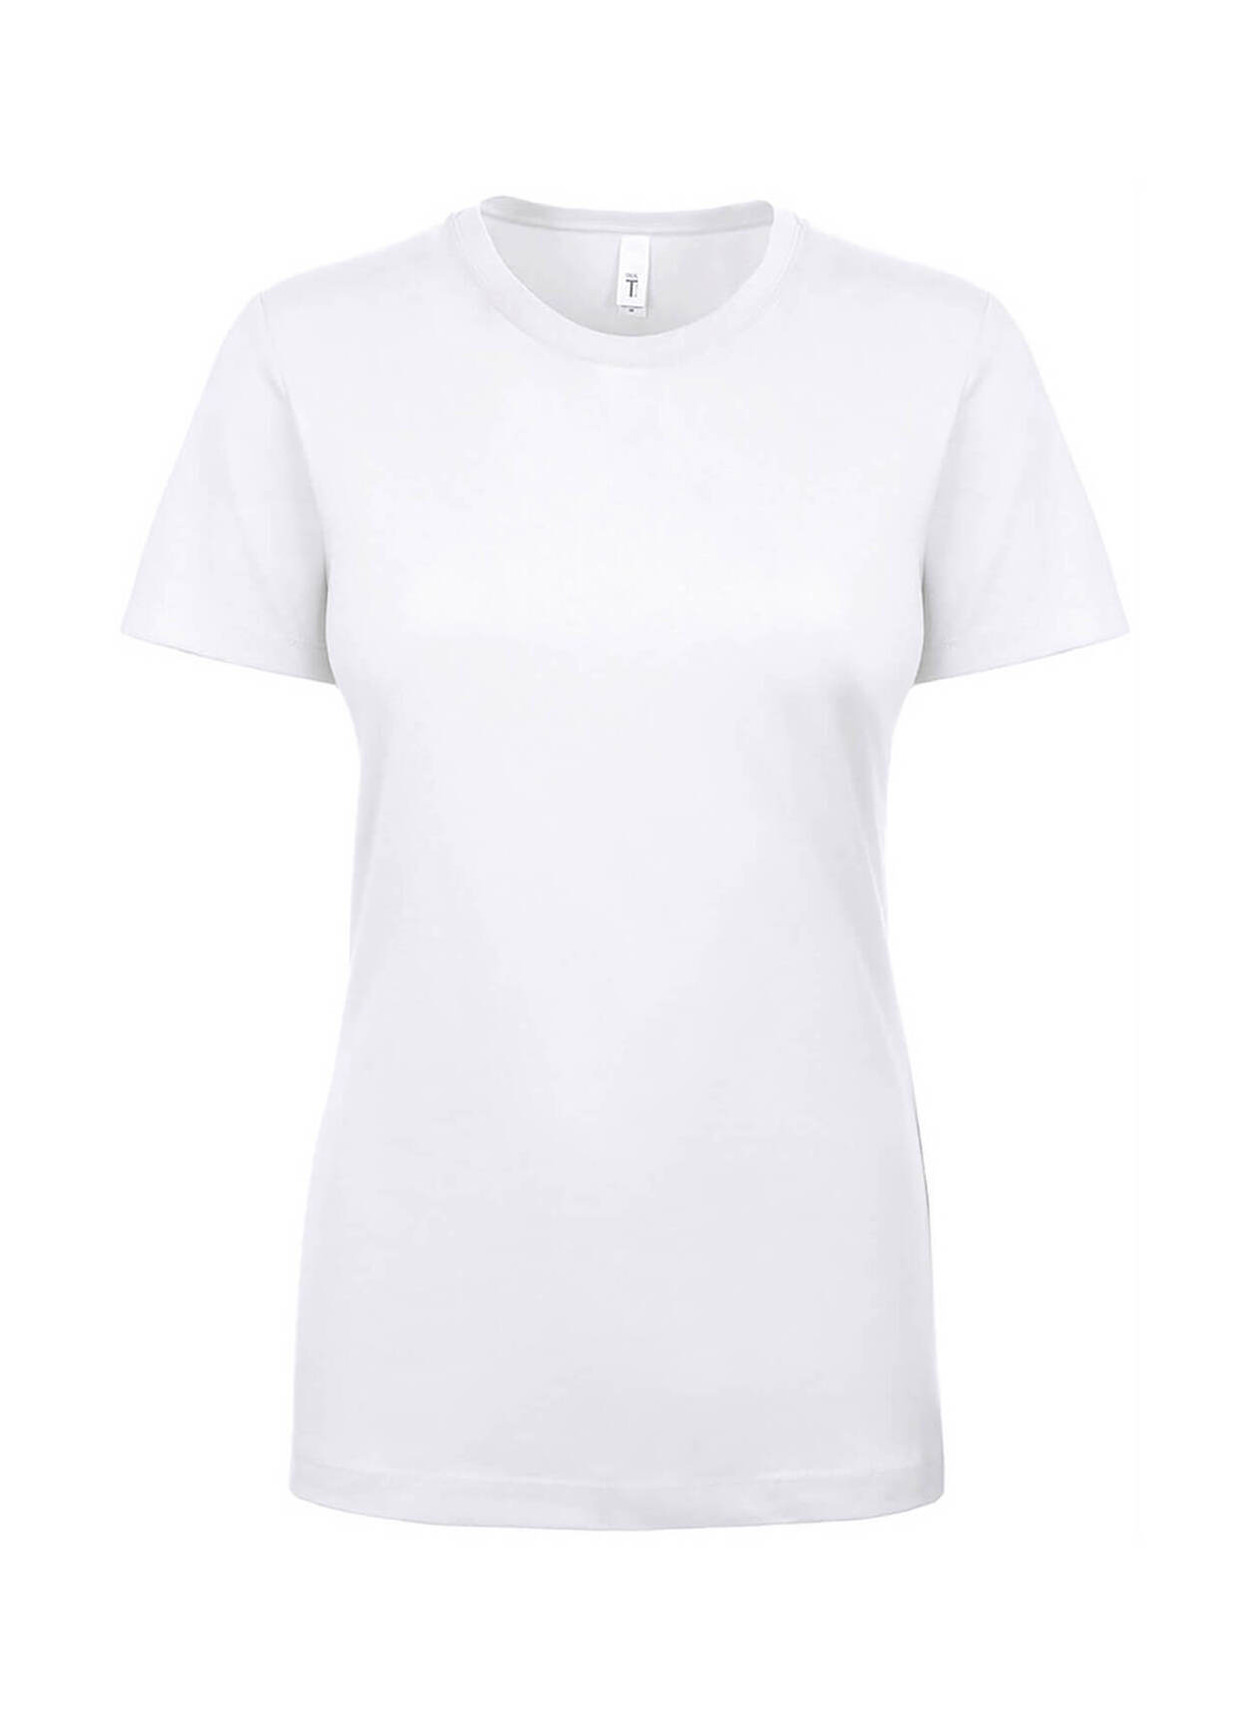 Next Level Women's White Ideal T-Shirt